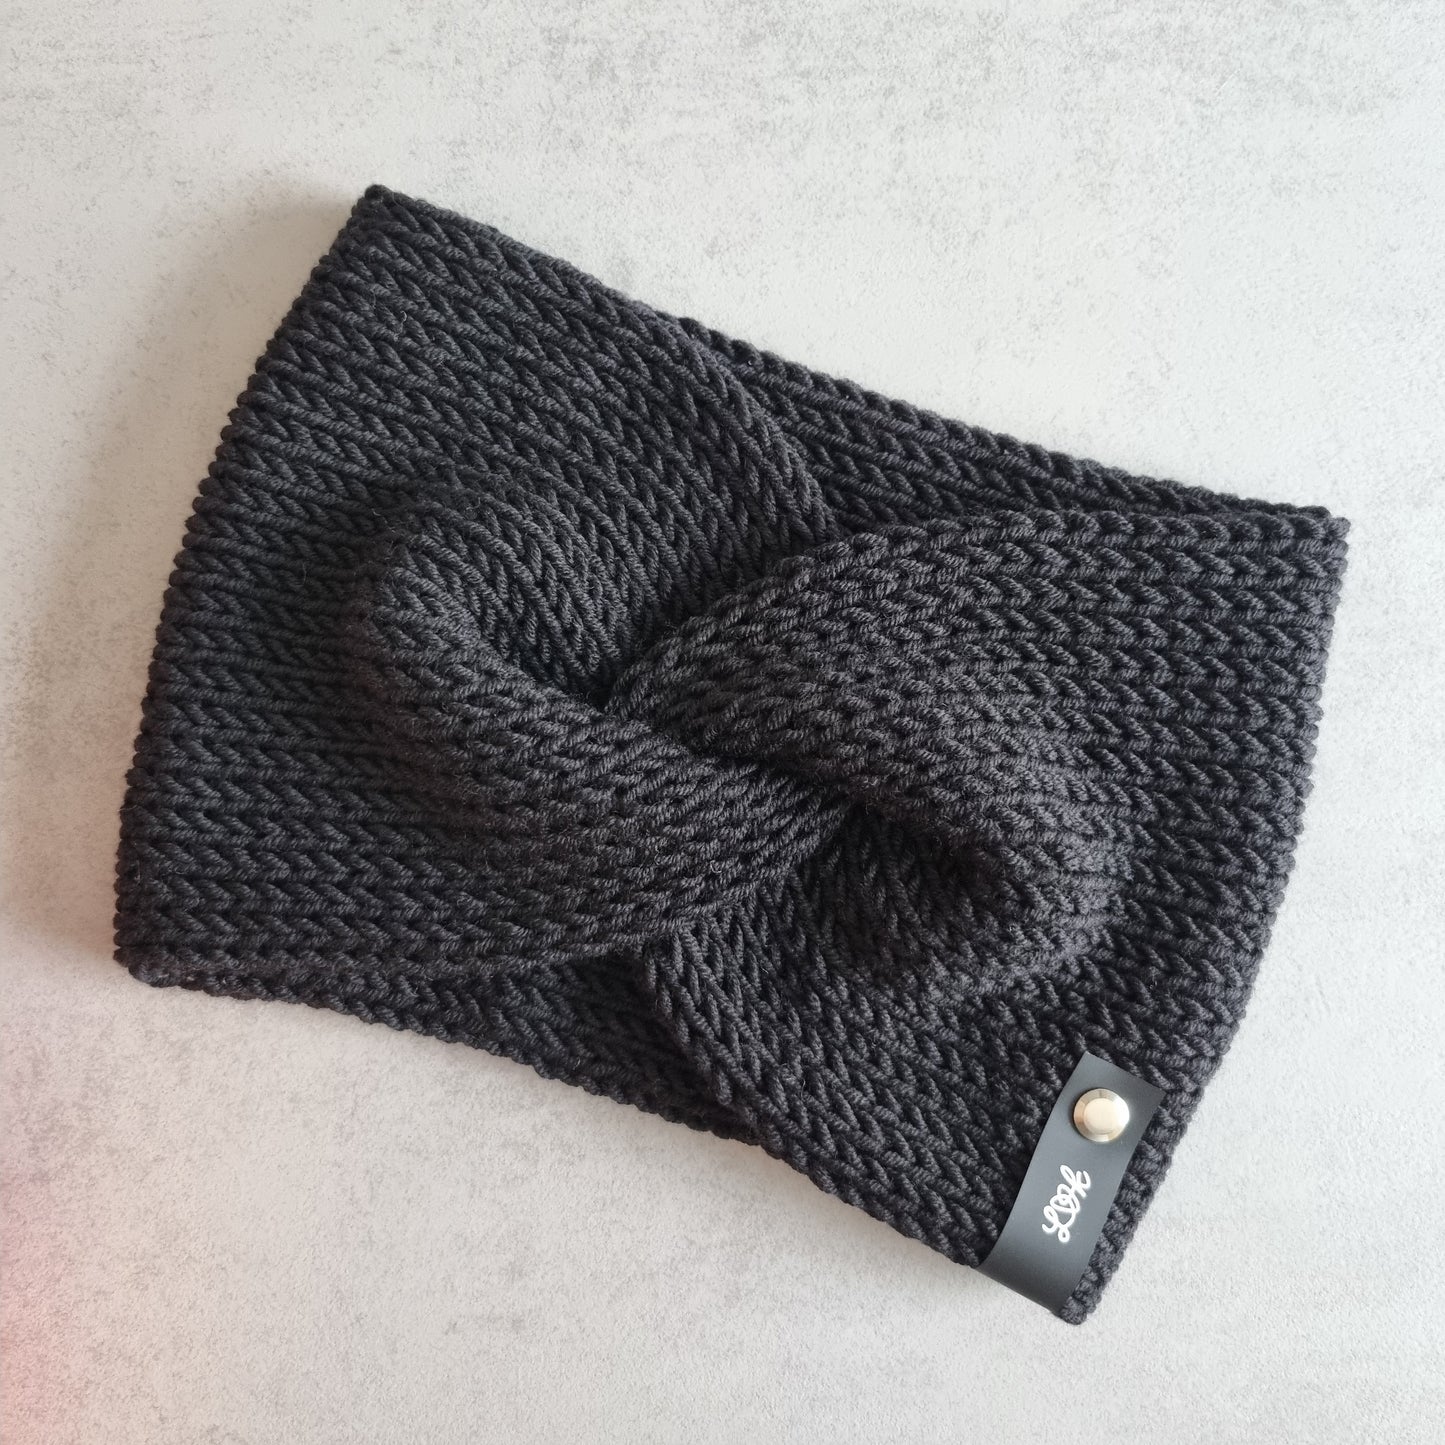 Twist headband made from 100% merino wool